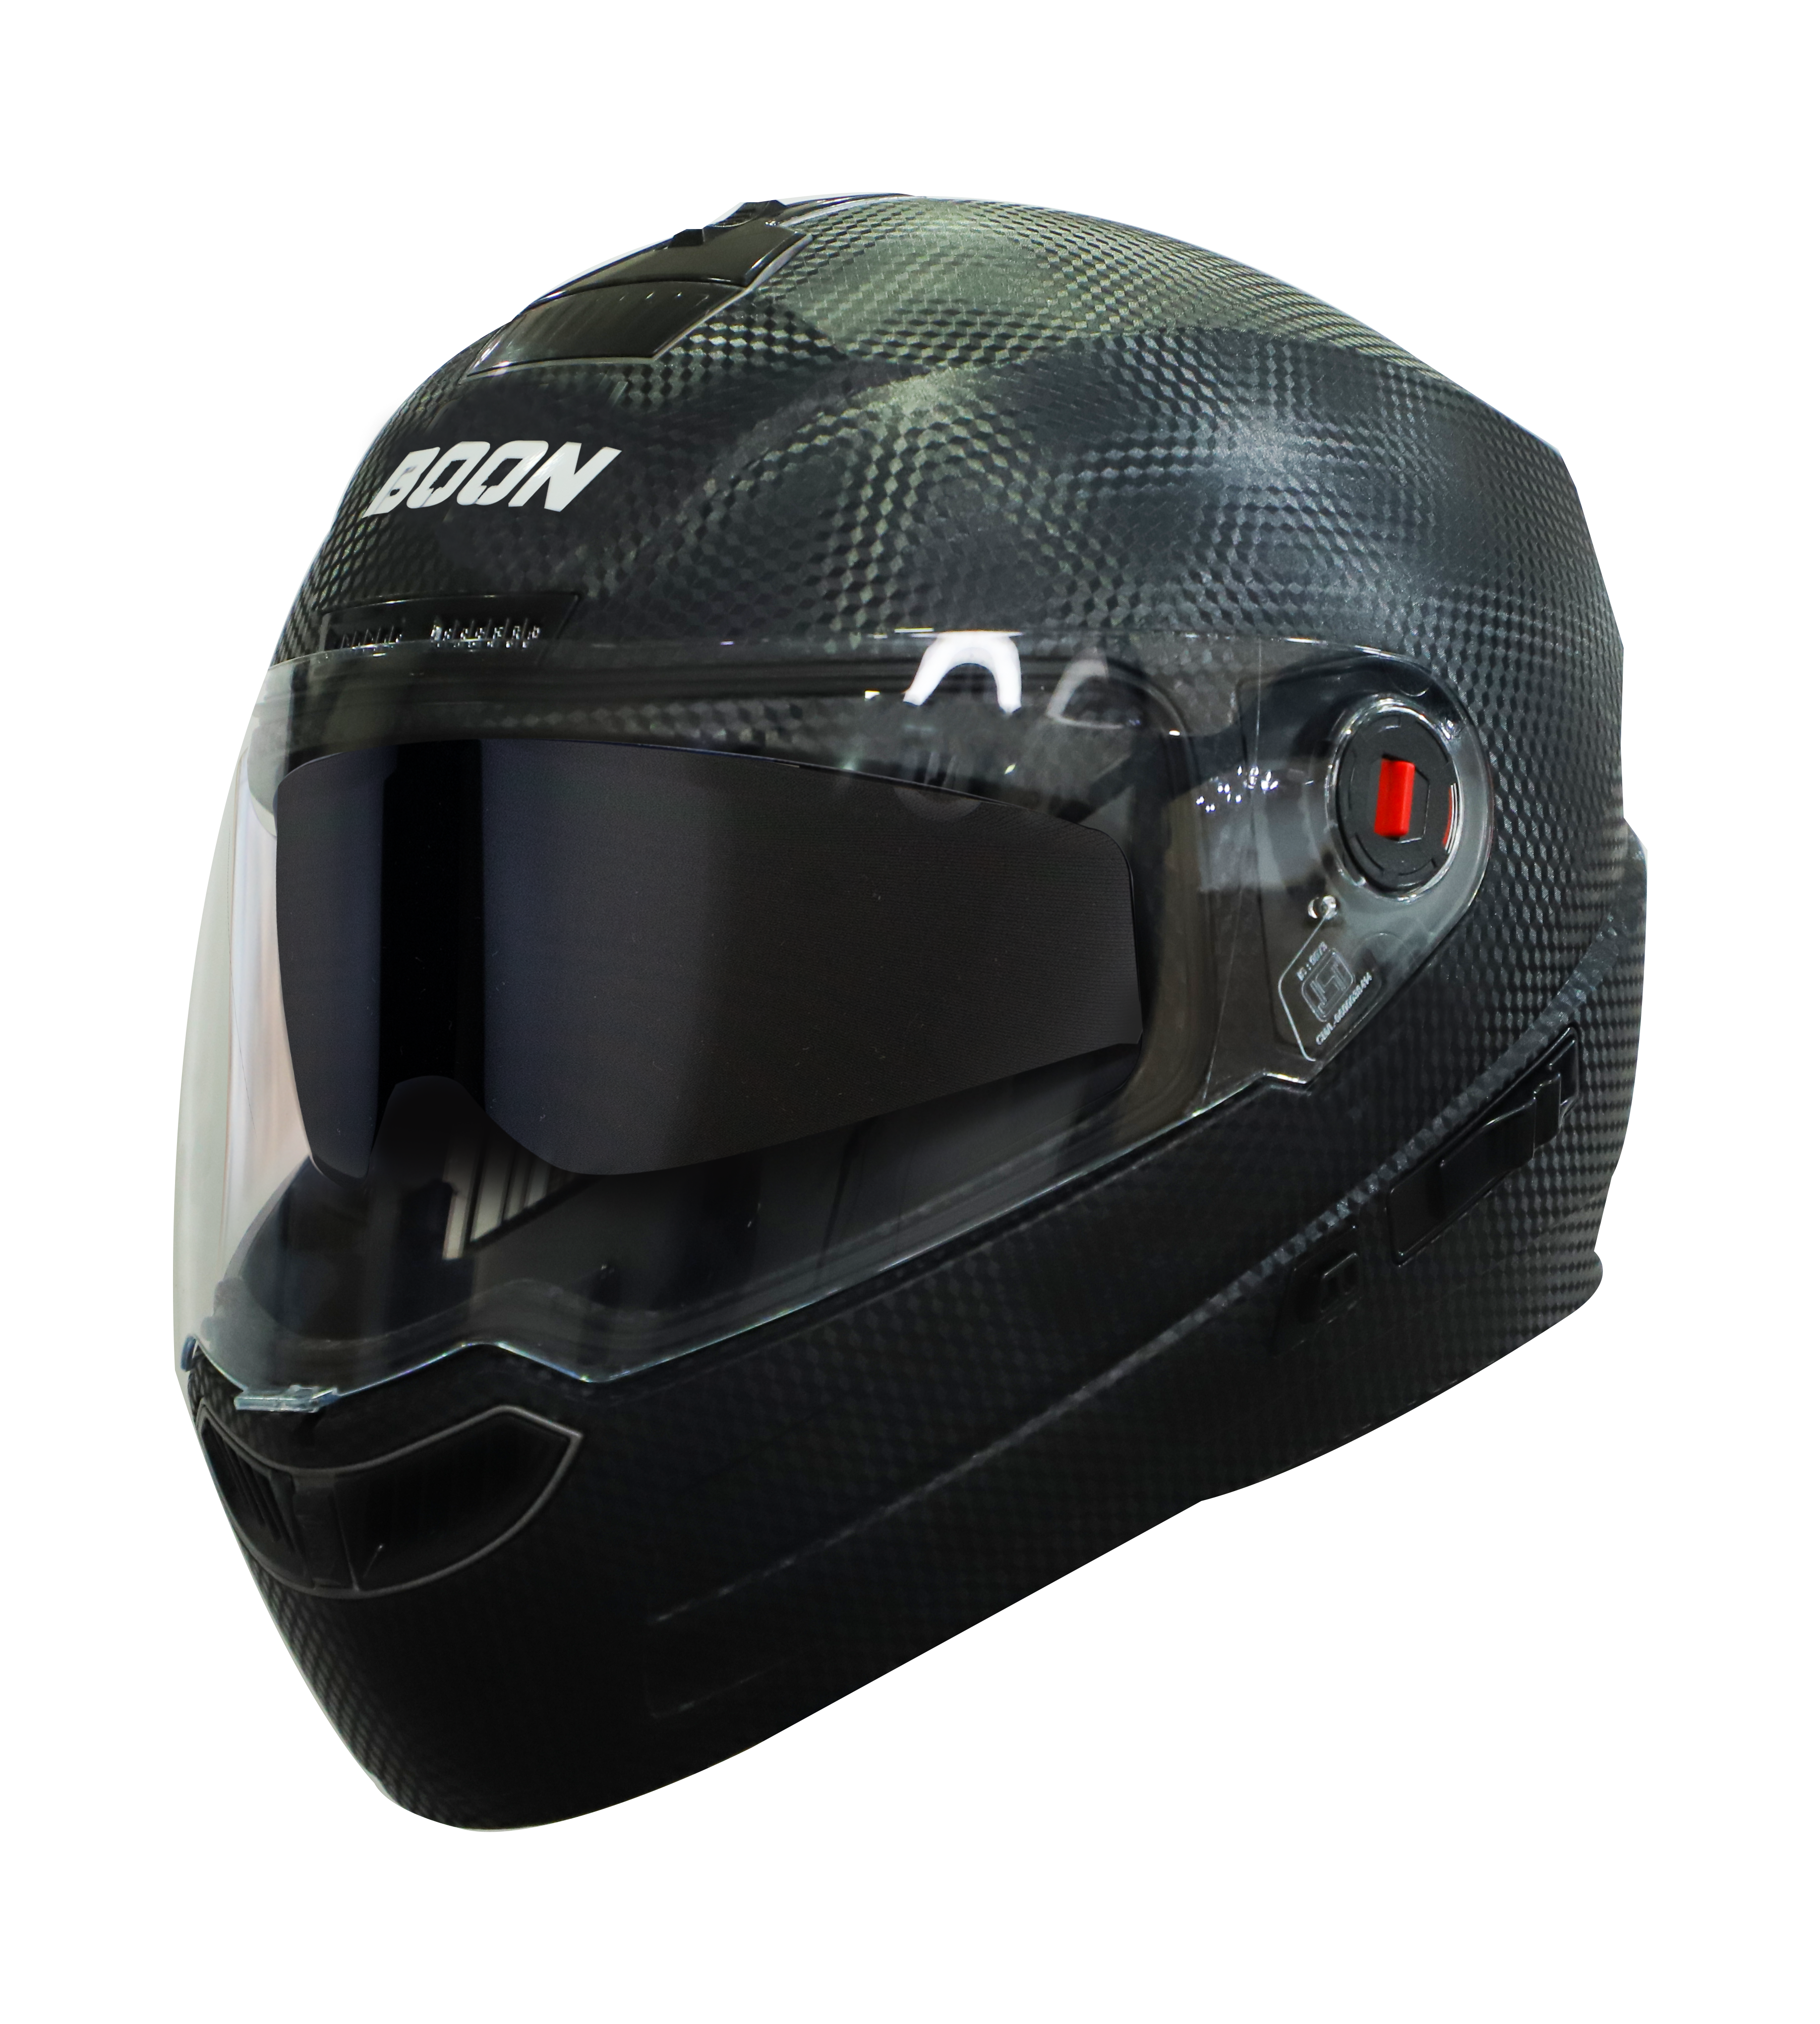 Steelbird SBA-1 Boon Dashing ISI Certified Full Face Helmet for Men and Women with Inner Smoke Sun Shield (Dashing Black)